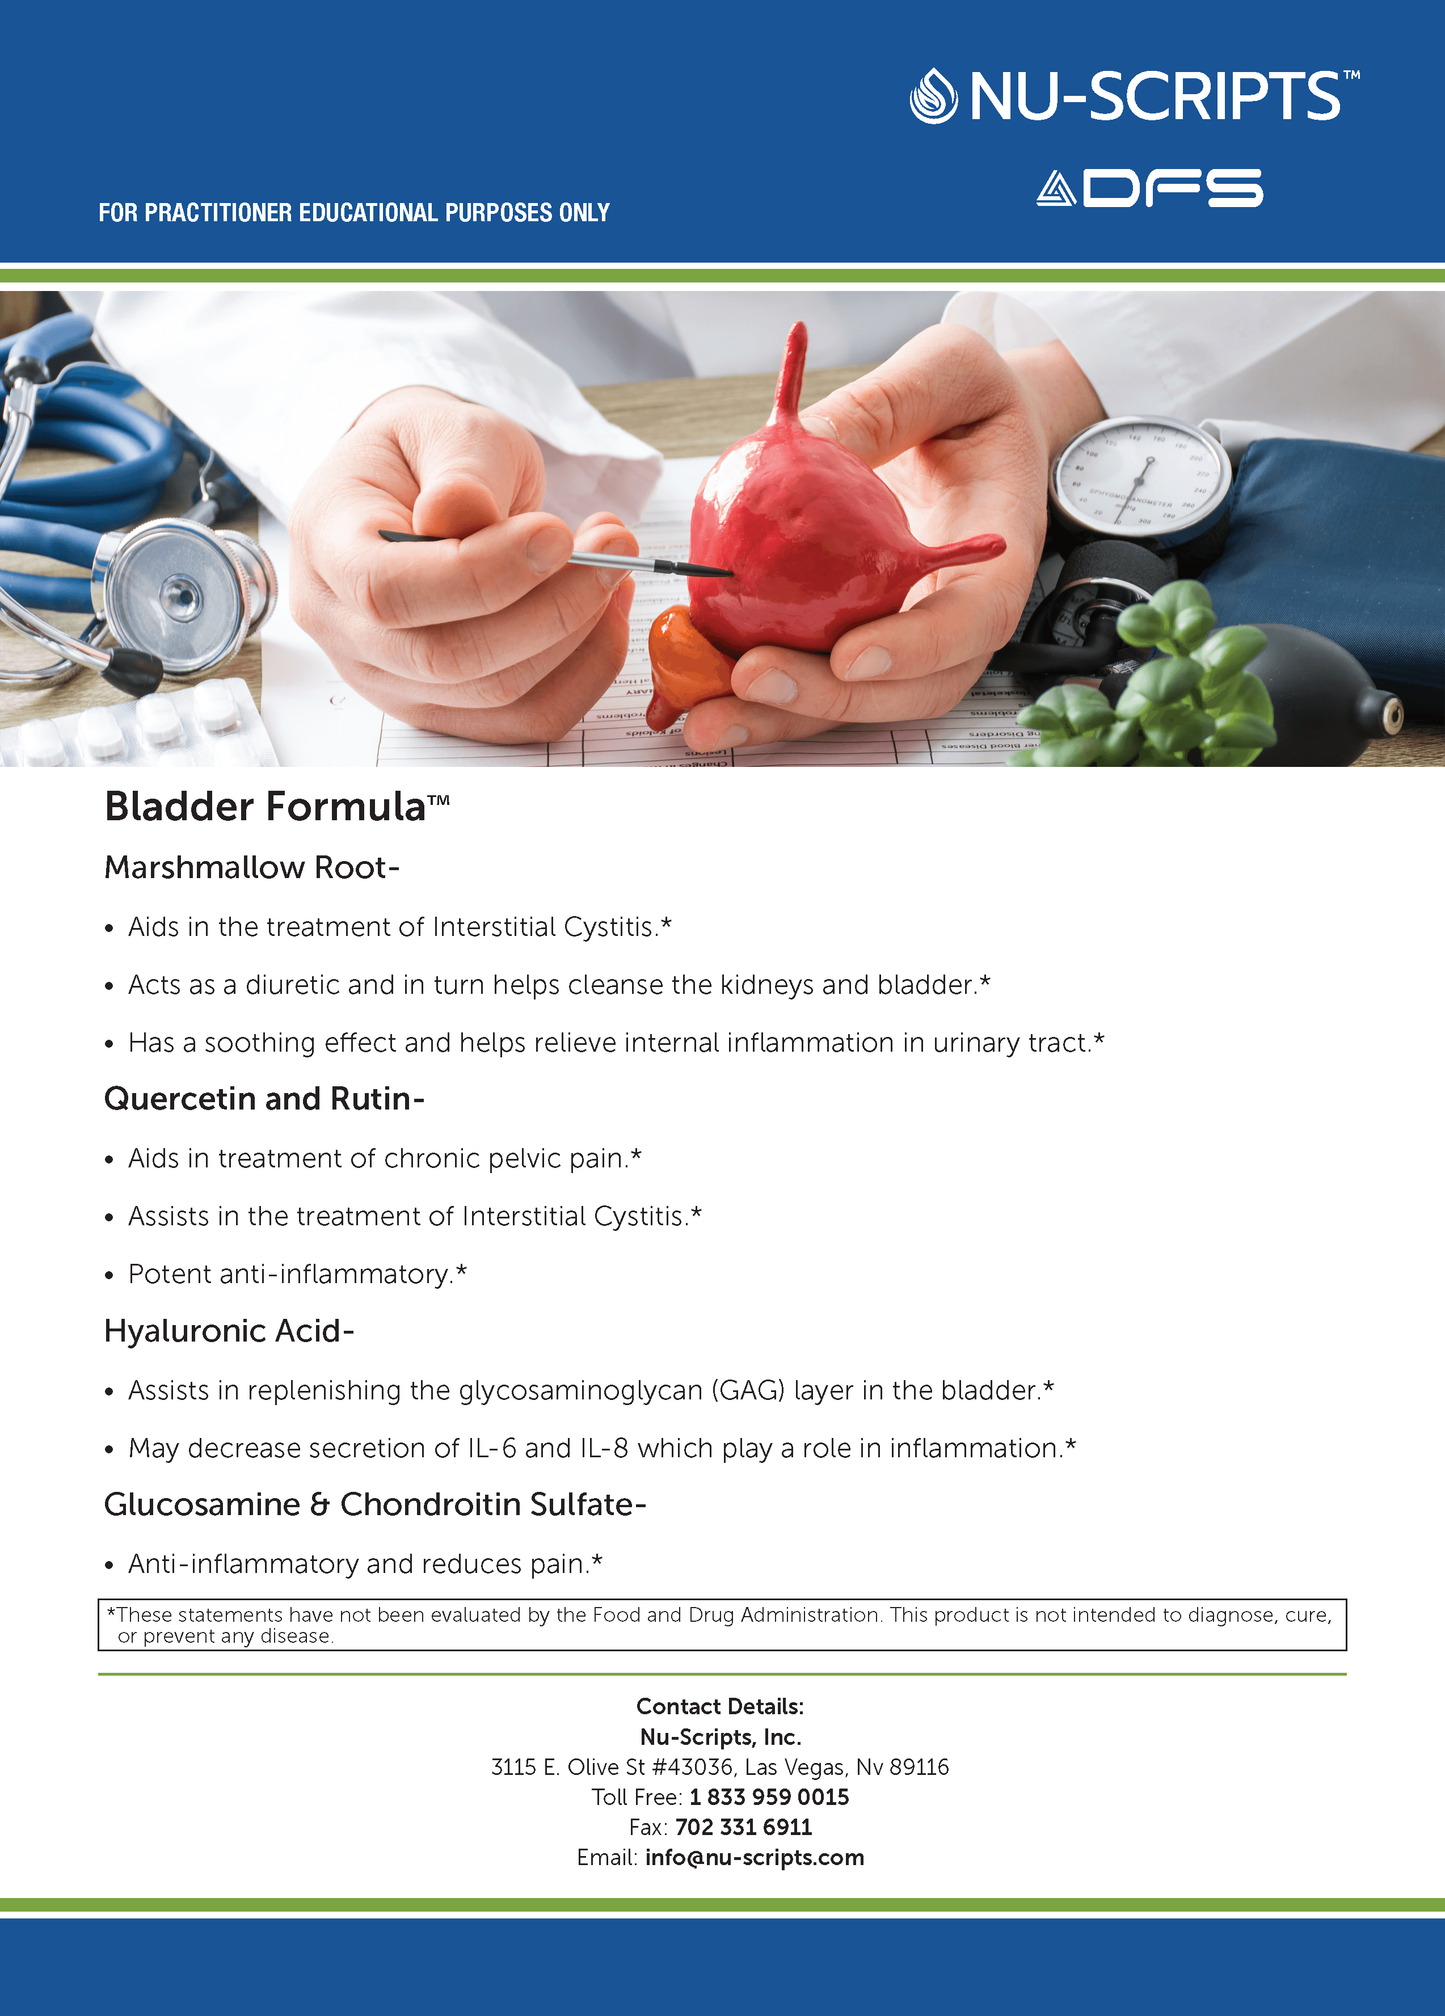 Bladder Formula (DFS)